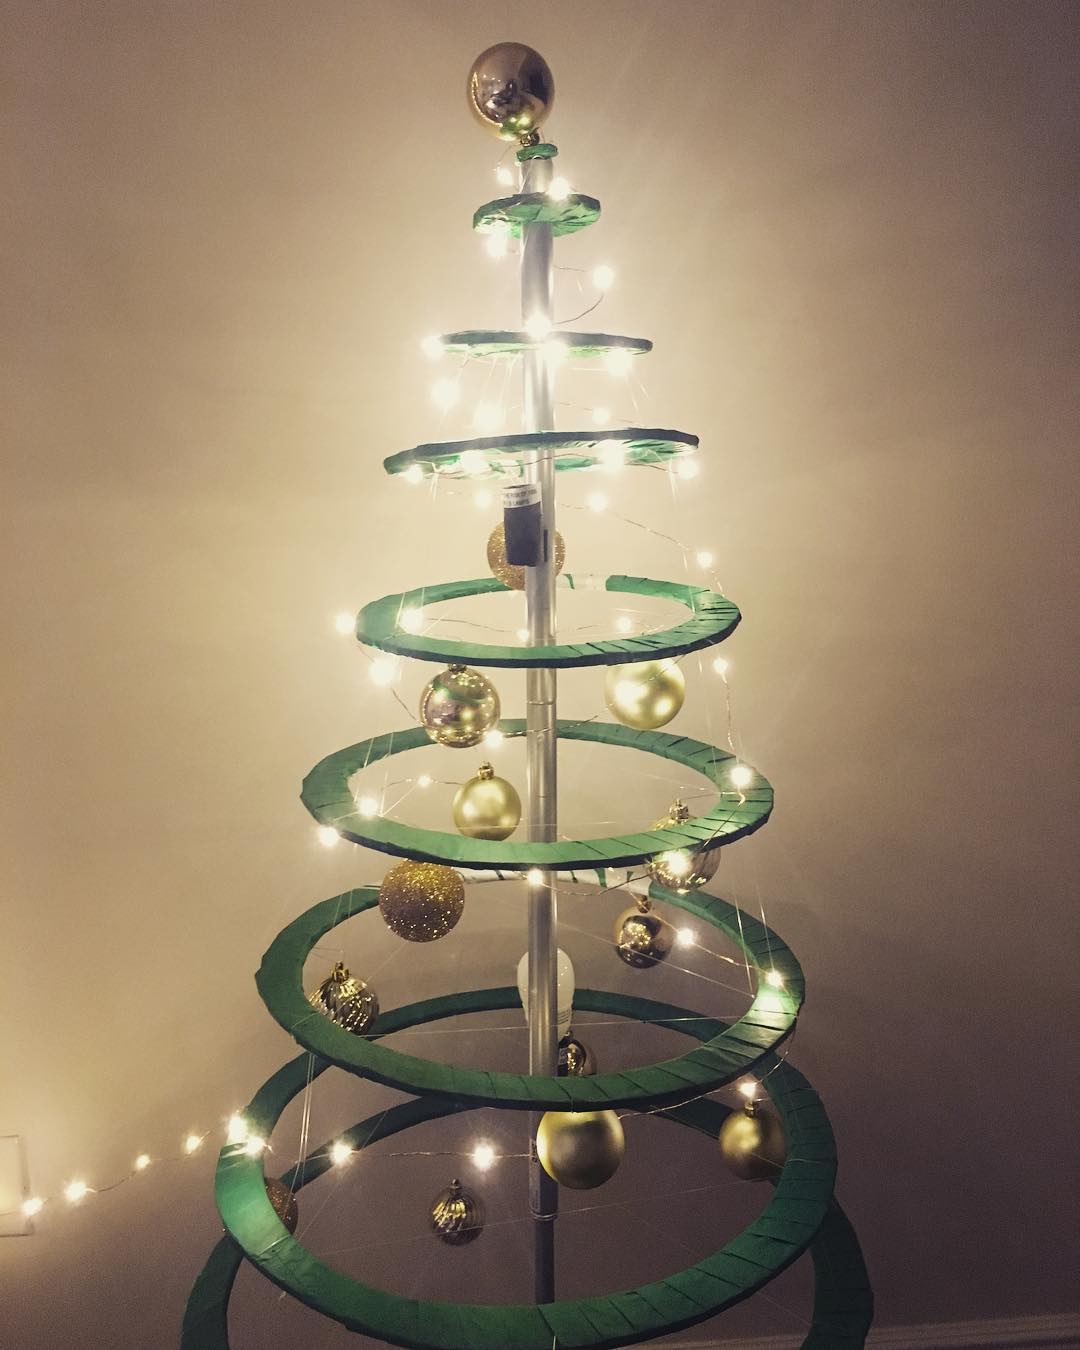 Handmade Christmas tree.